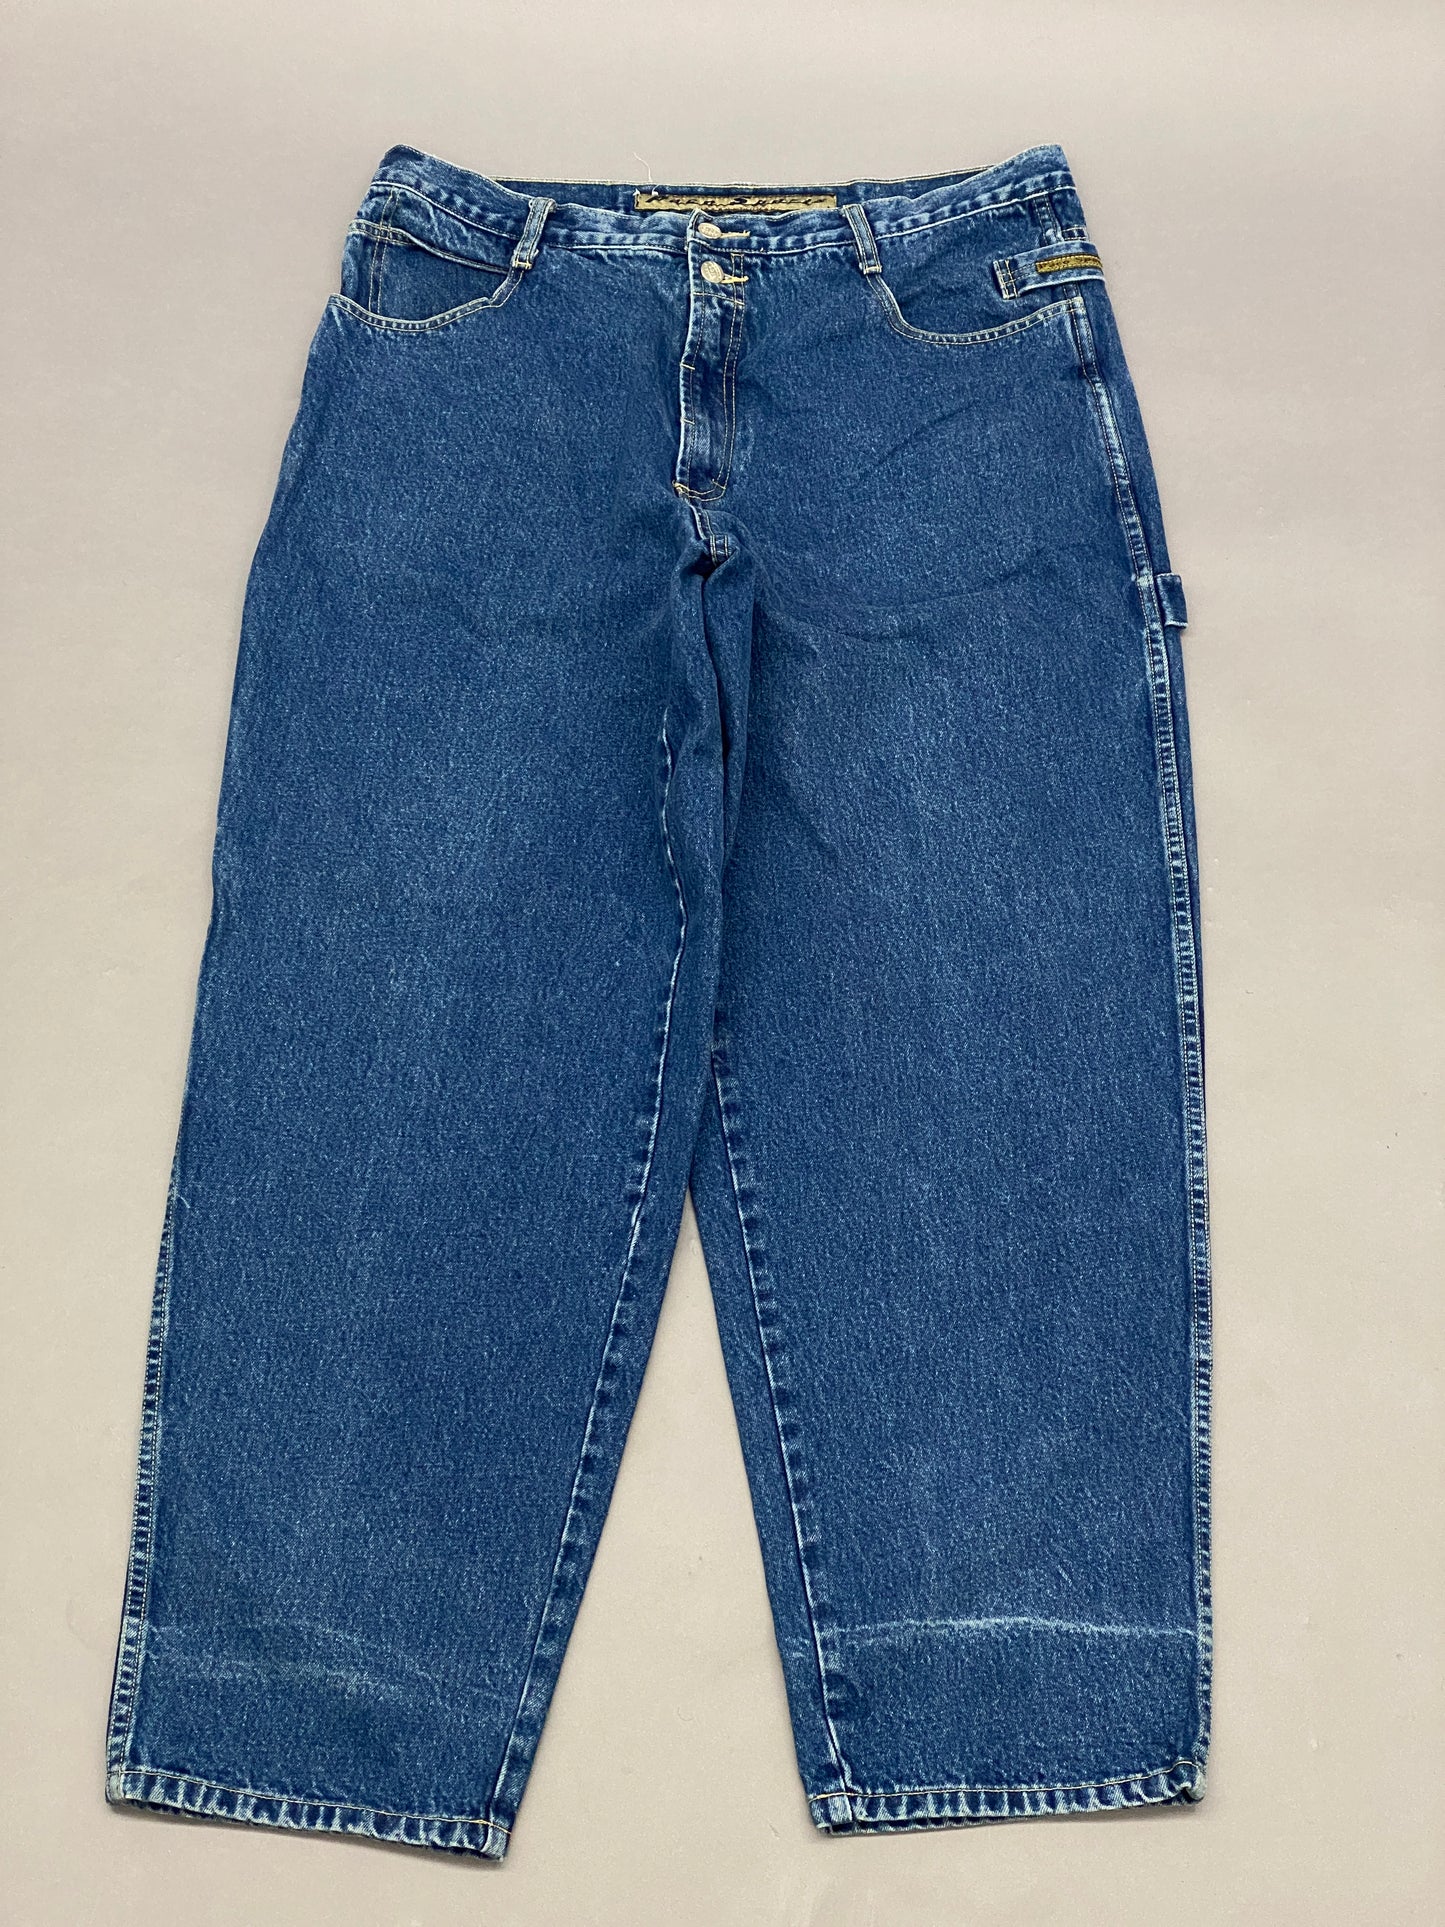 Paco Sport Carpenter Vintage Jeans - 38